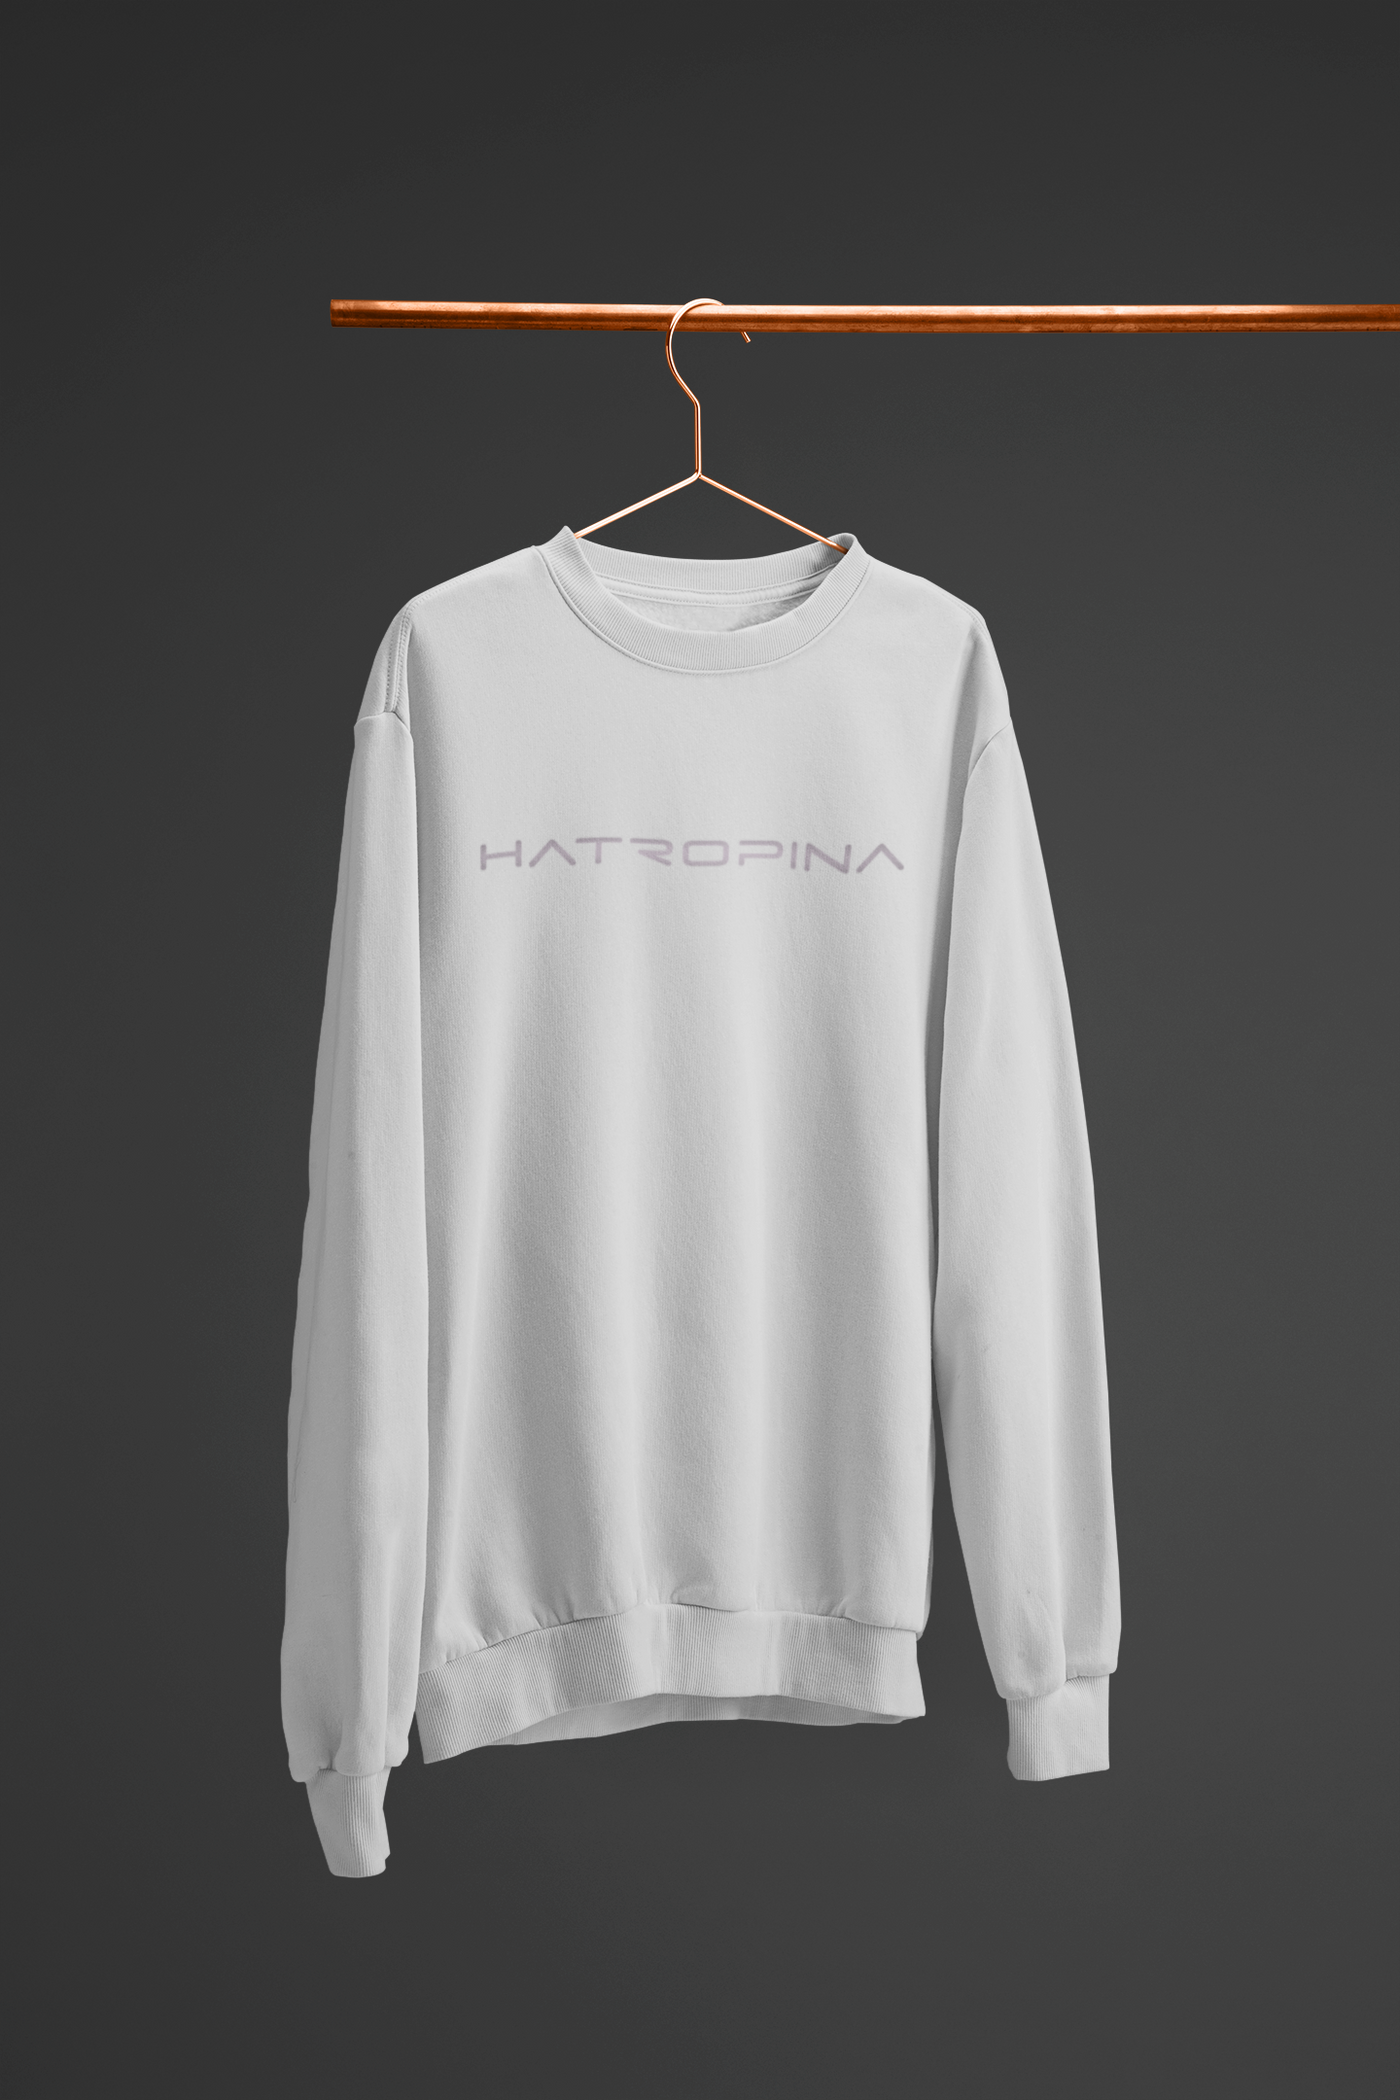 CHG unisex Hatropina crew neck sweatshirt